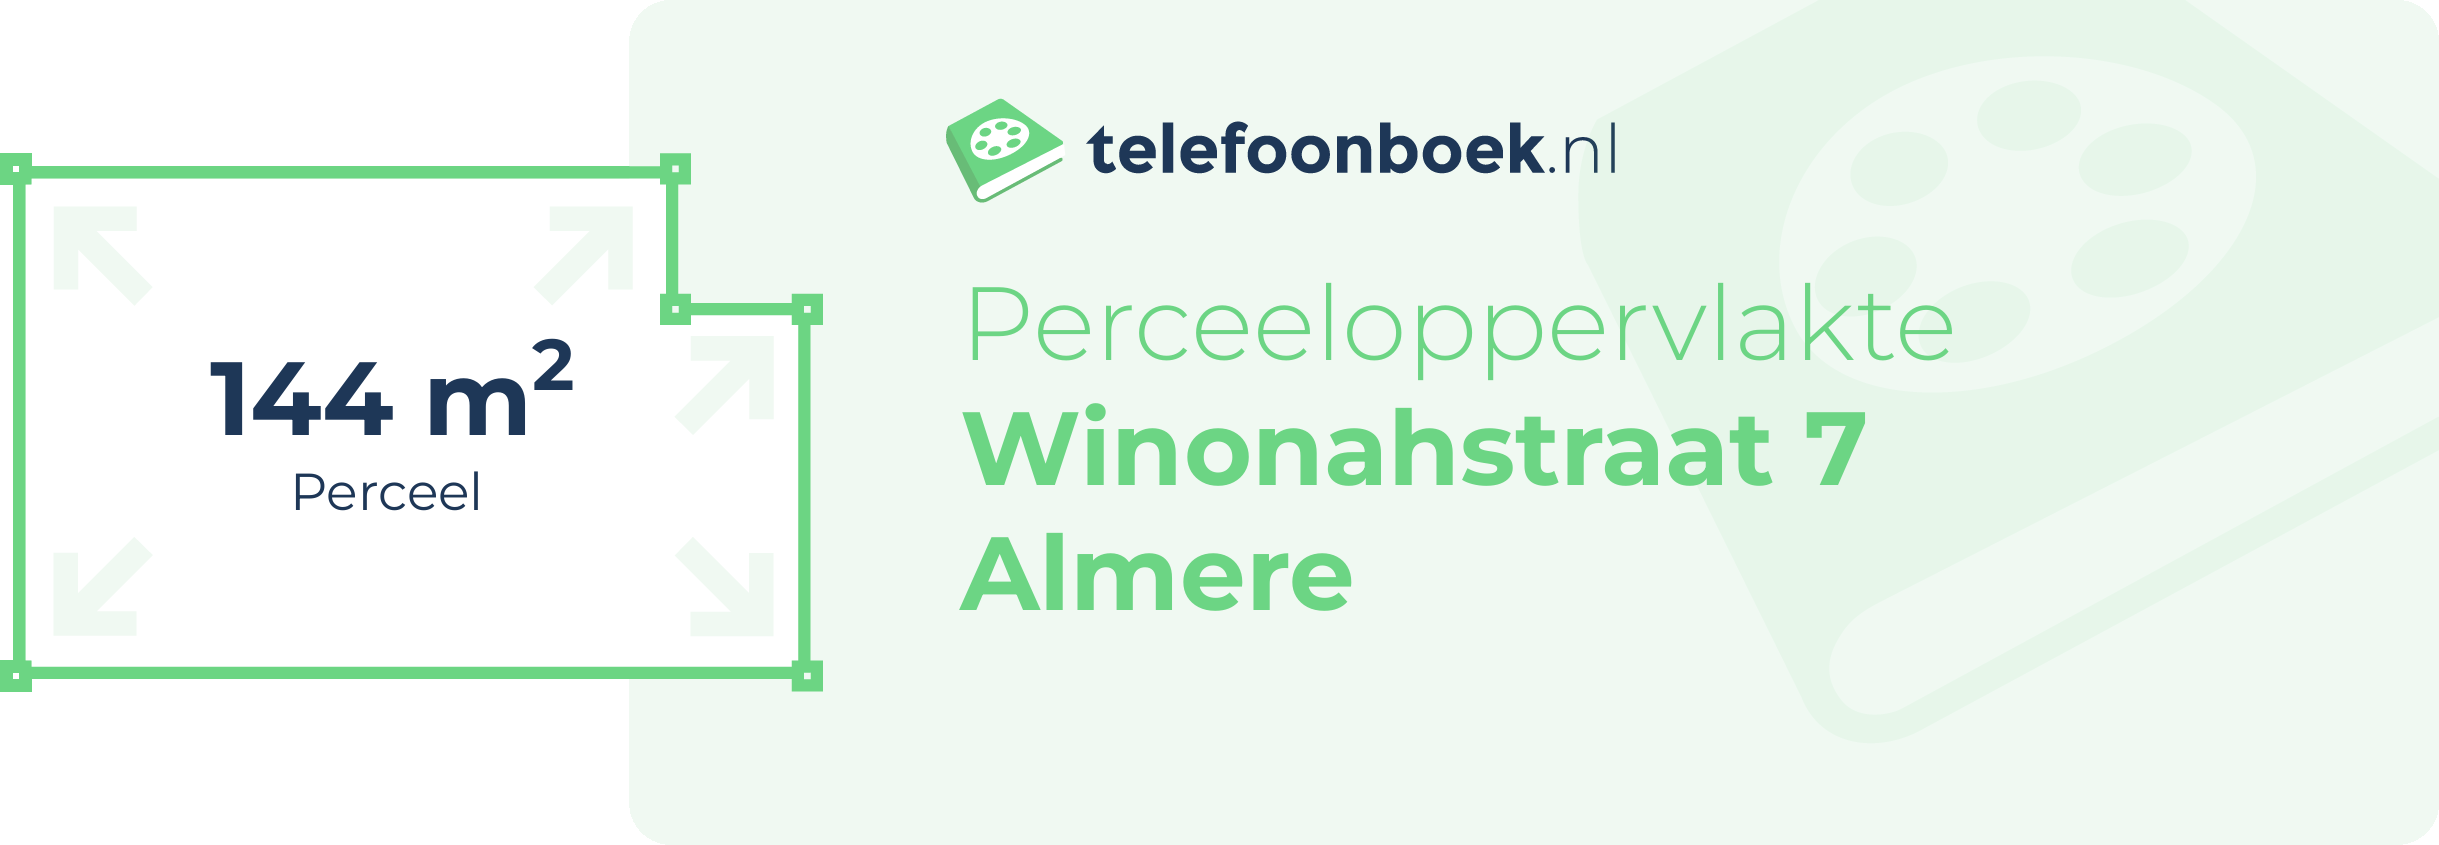 Perceeloppervlakte Winonahstraat 7 Almere